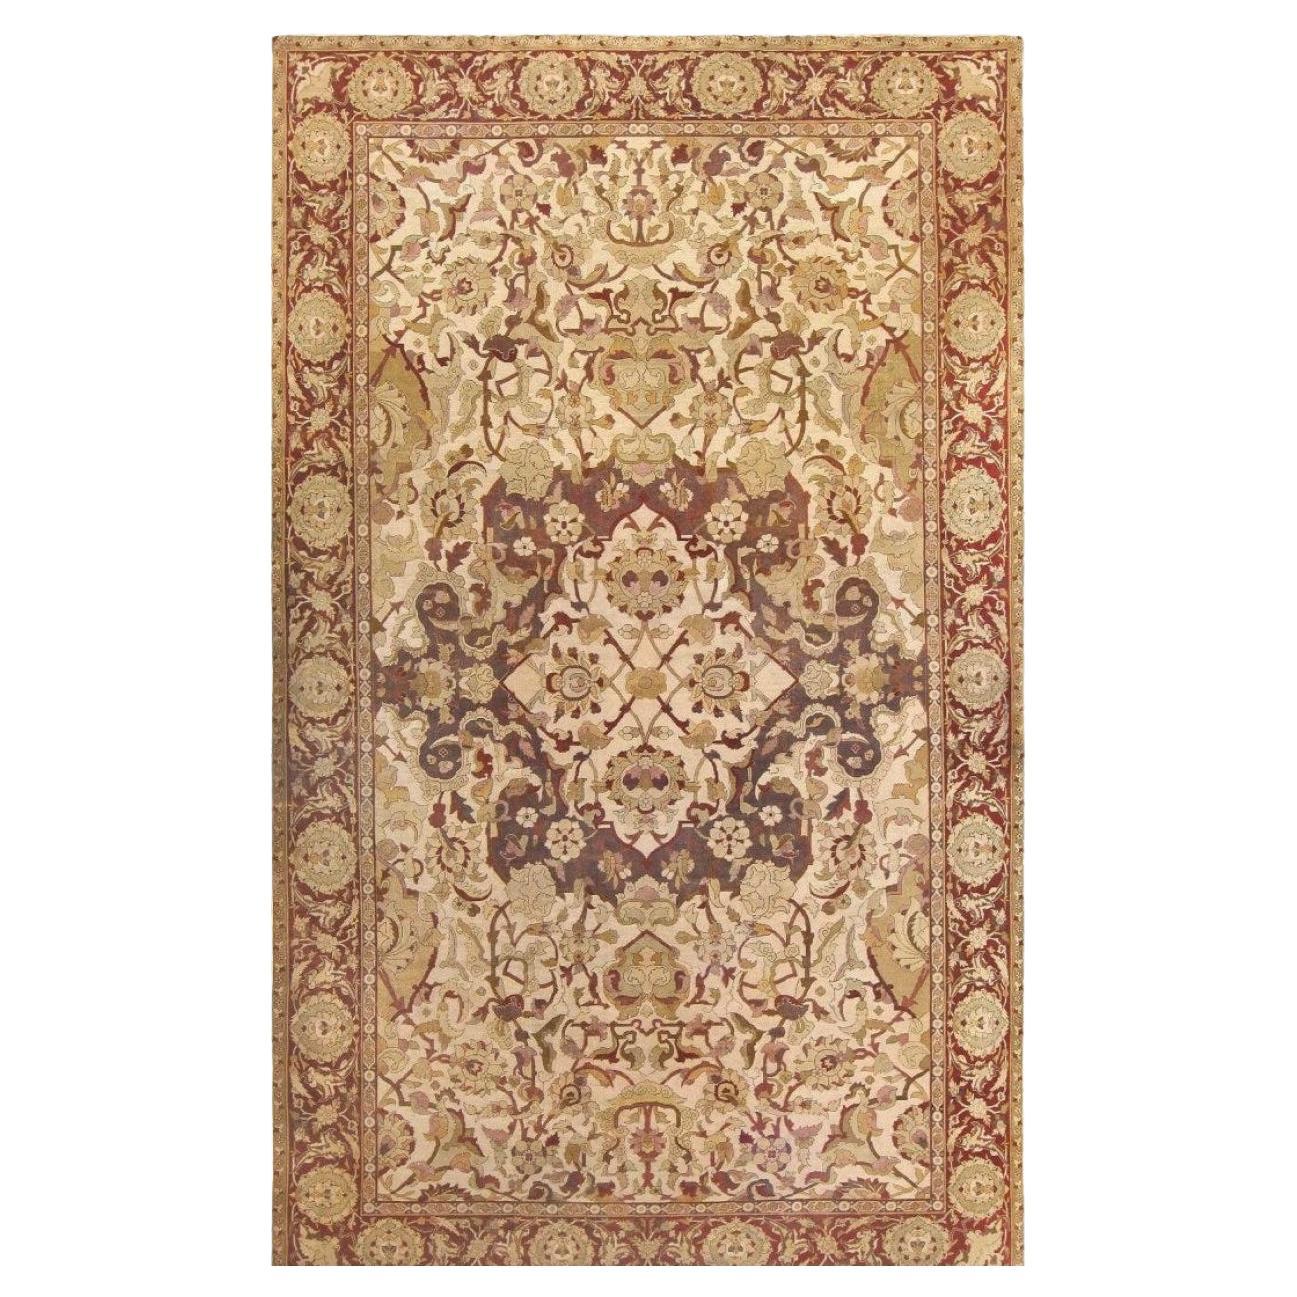 Antique Indian Amritsar Carpet For Sale